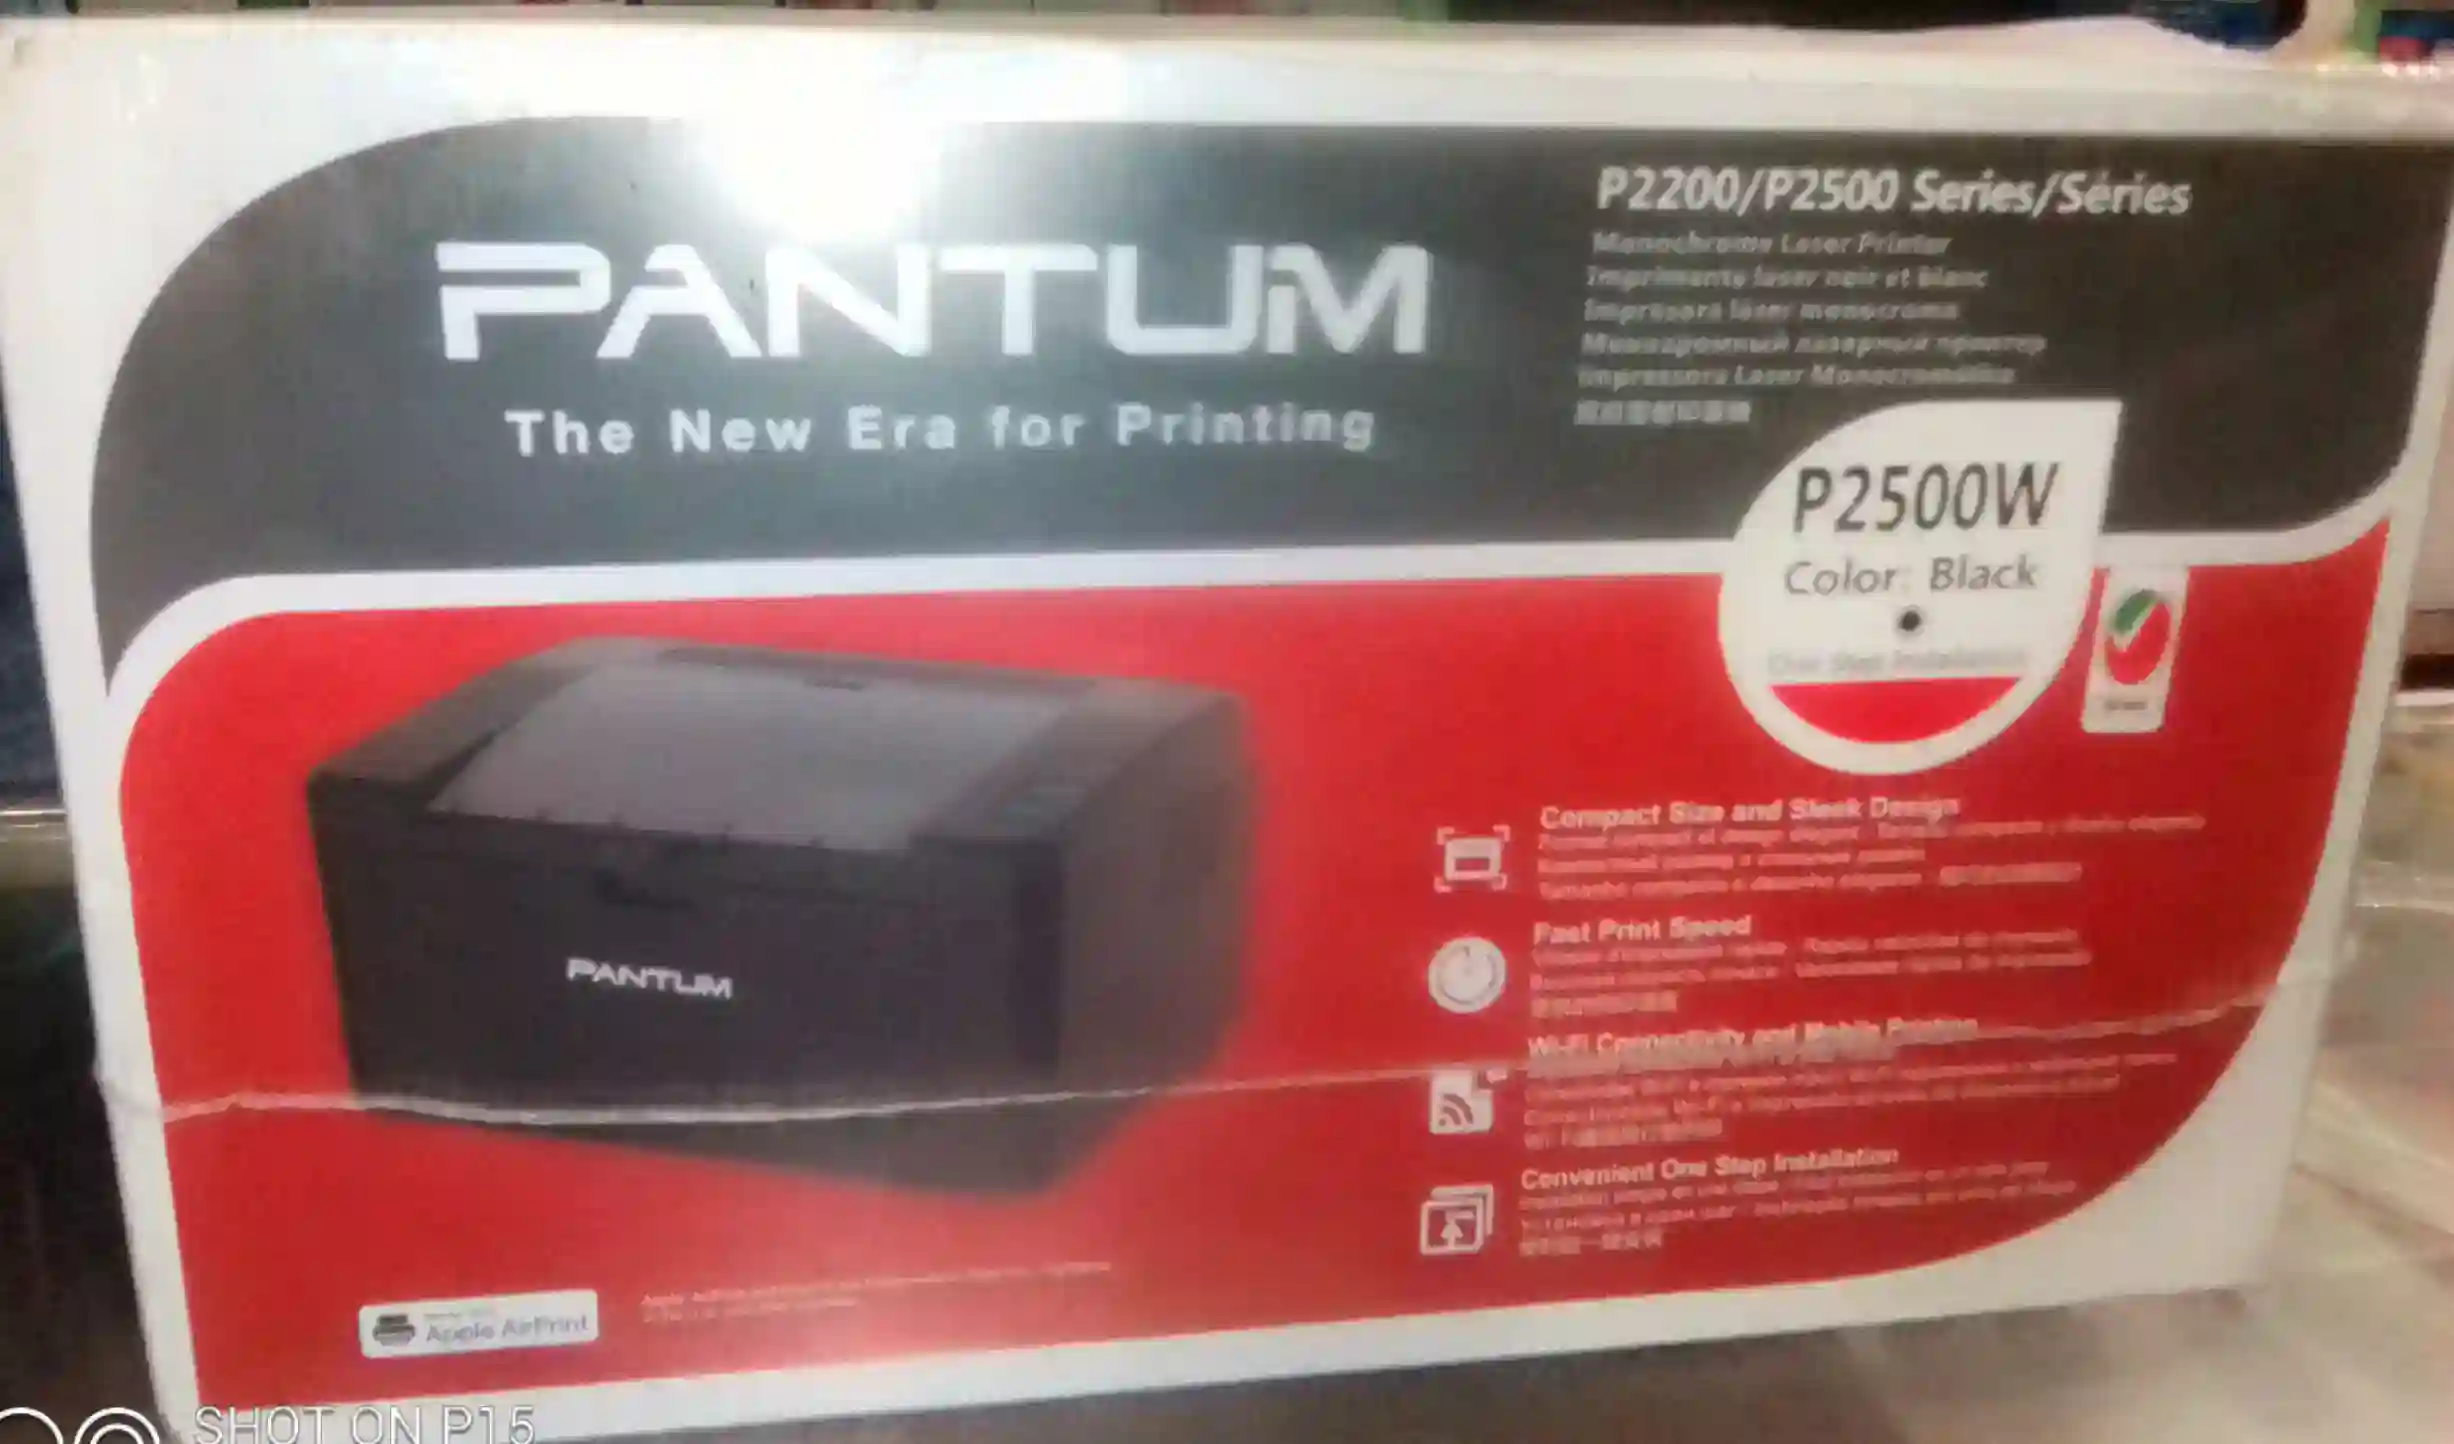 Pantum Monochrome laser printer